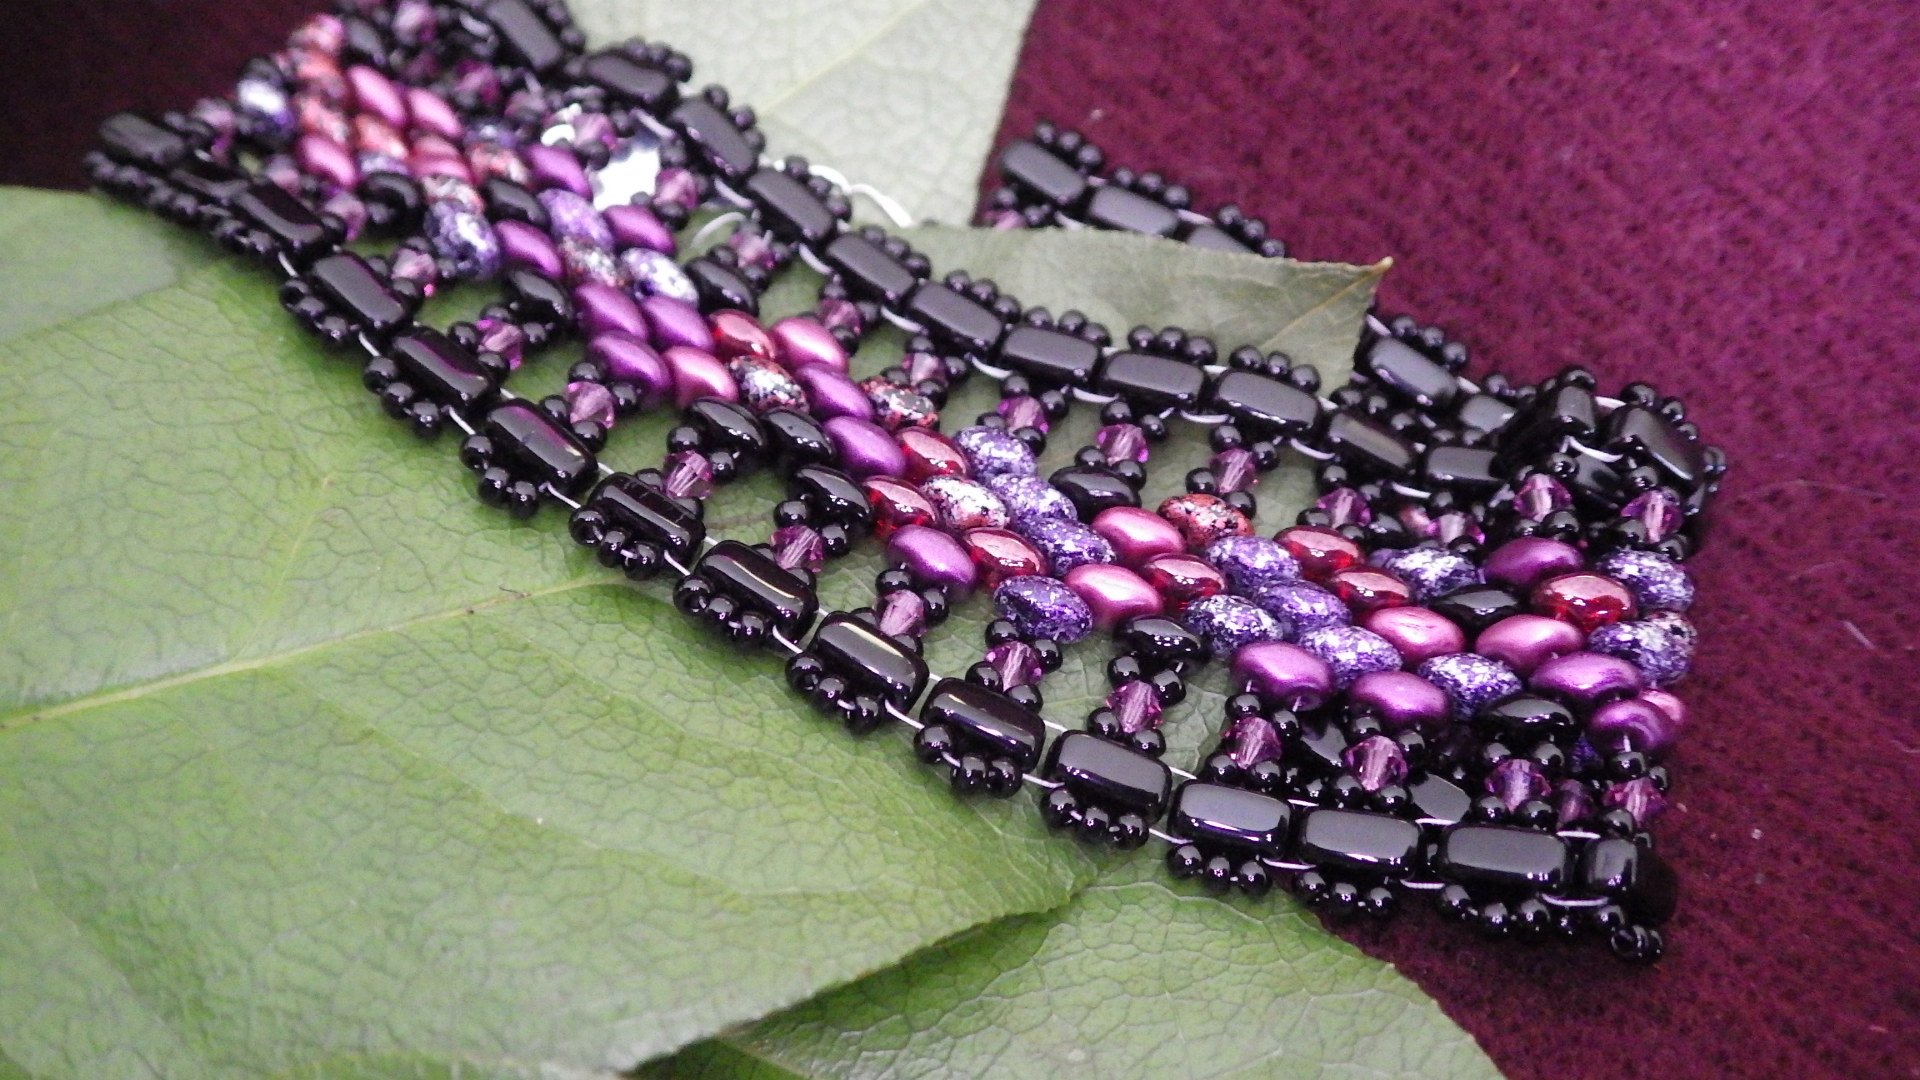  Seed  bead bracelet - Black edge, black fringe, purples/red/pink inside with silver findings  8.5”  $45.00 